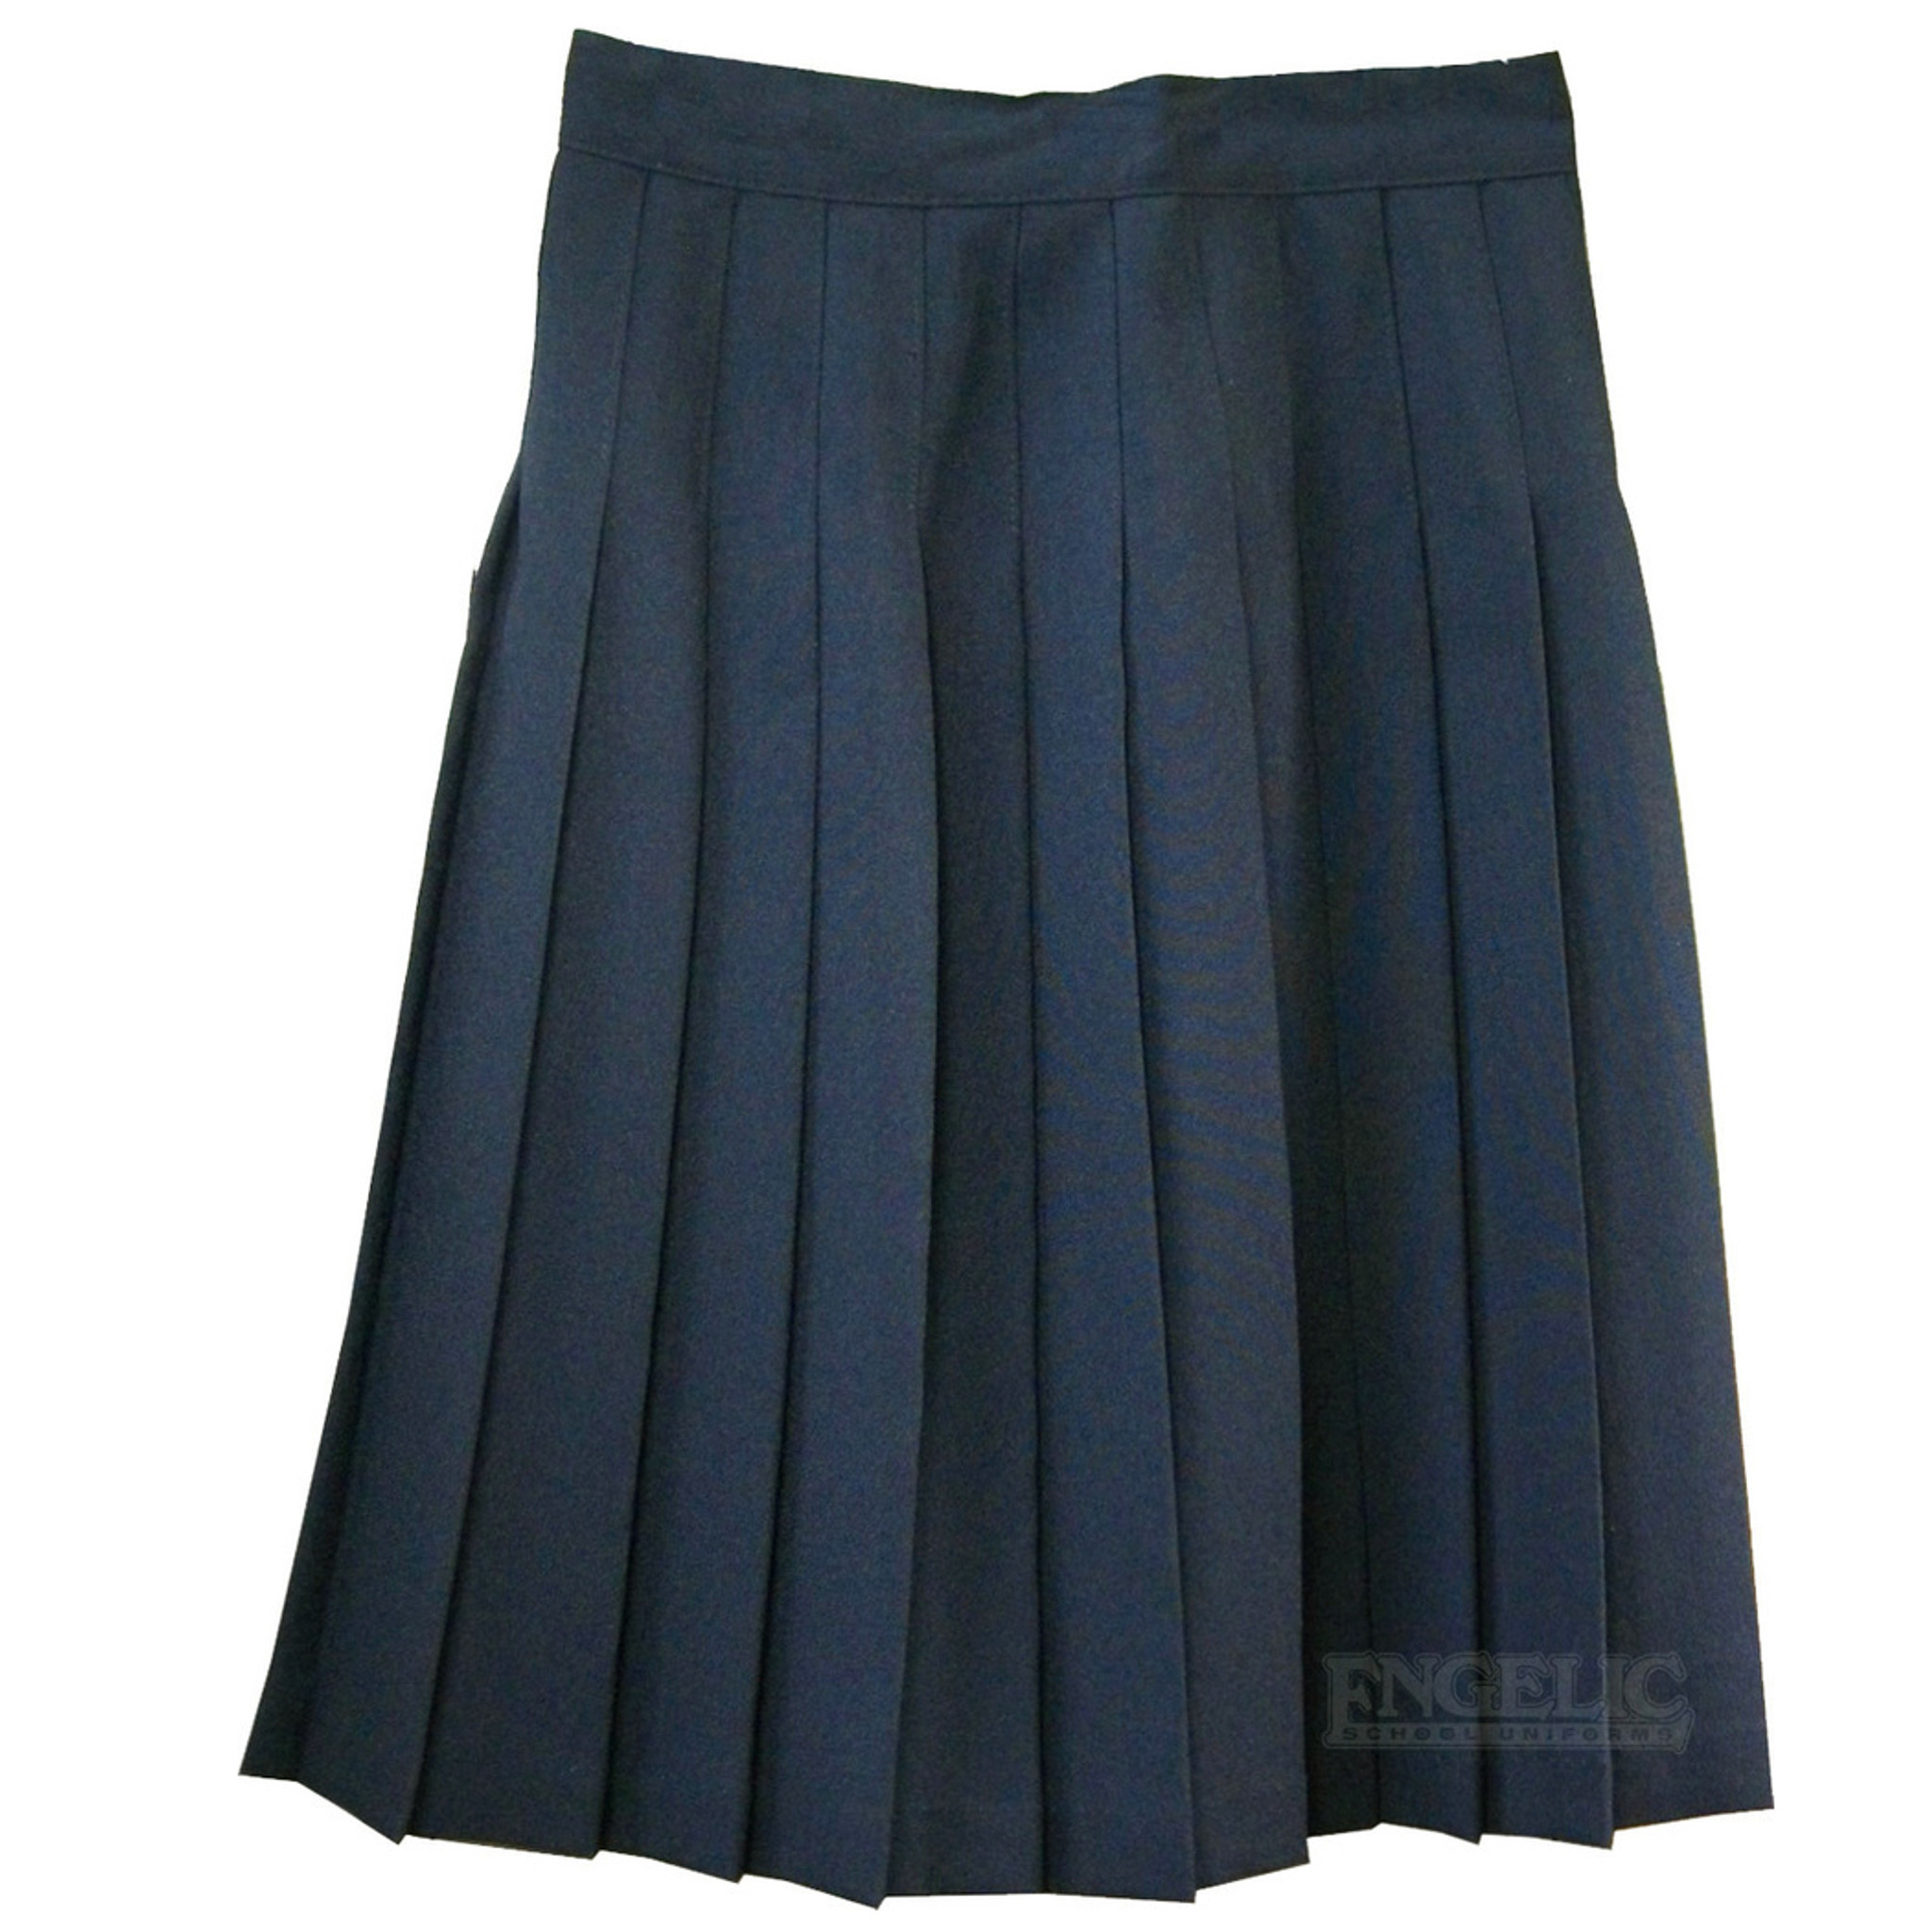 Girls School Uniform Pleated Skirt Navy or Black - Engelic Uniforms